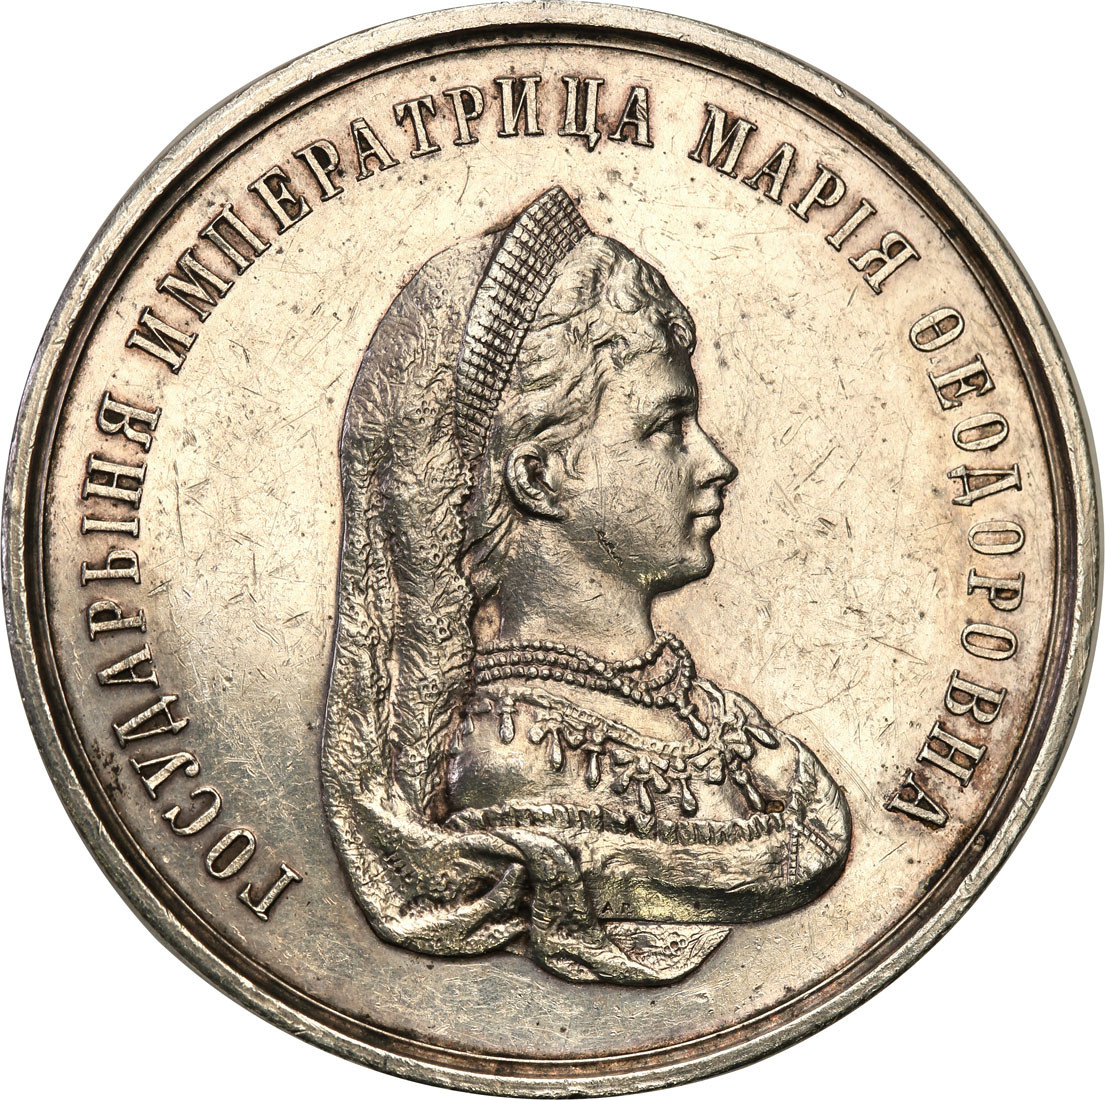 Rosja, Aleksander lll. Medal nagrodowy szkolny Maria Fiodorowna, srebro - Rzadki